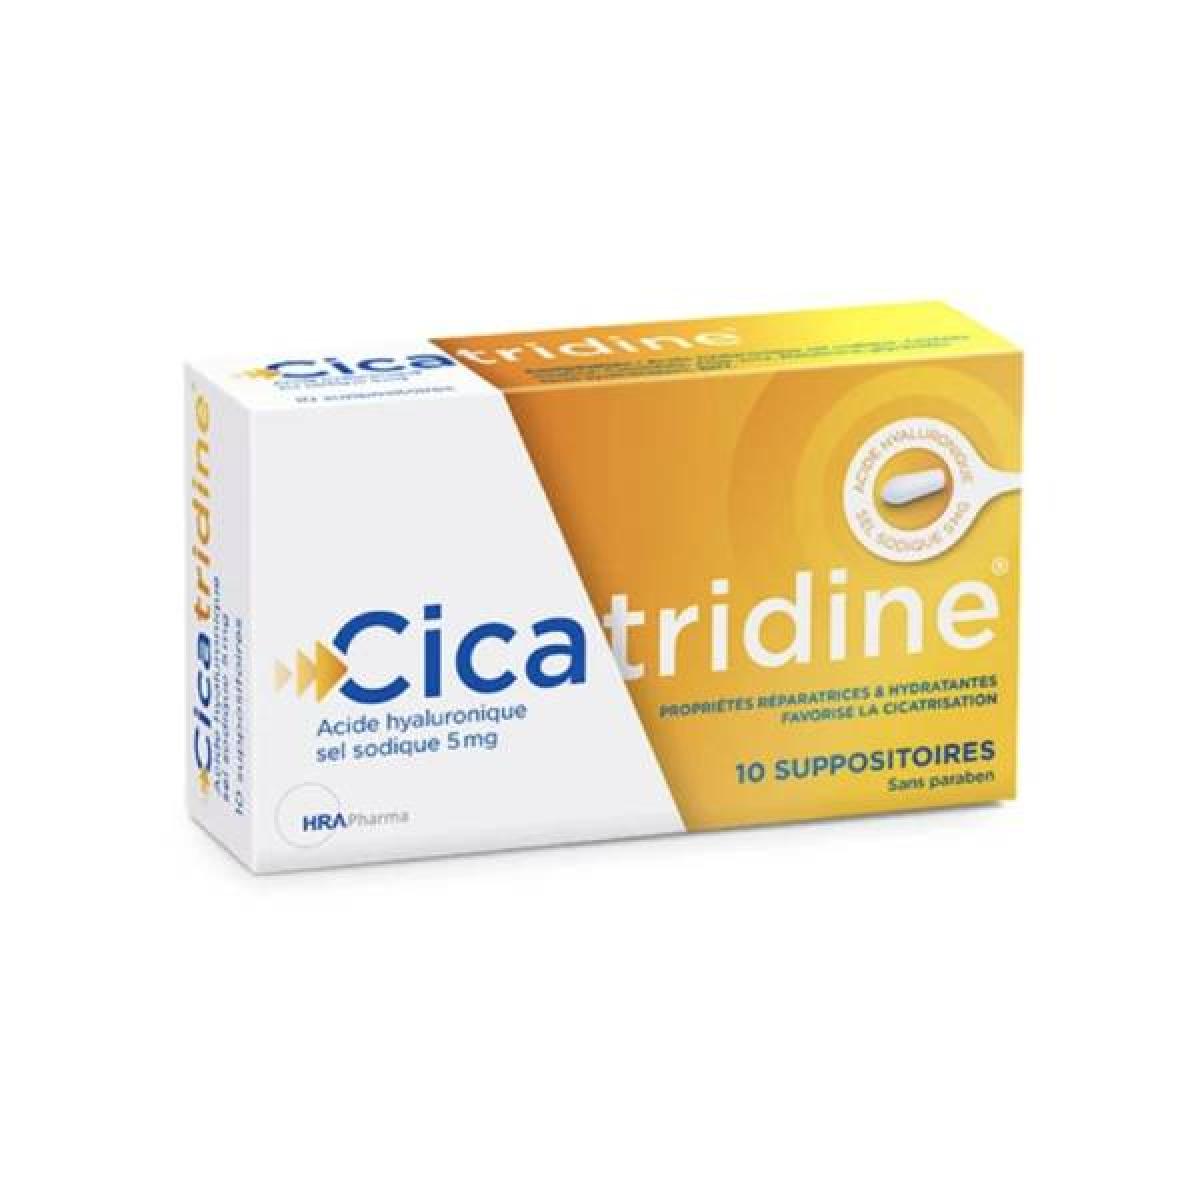 HRA PHARMA Cicatridine 10 suppositoires - Parapharmacie - Pharmarket